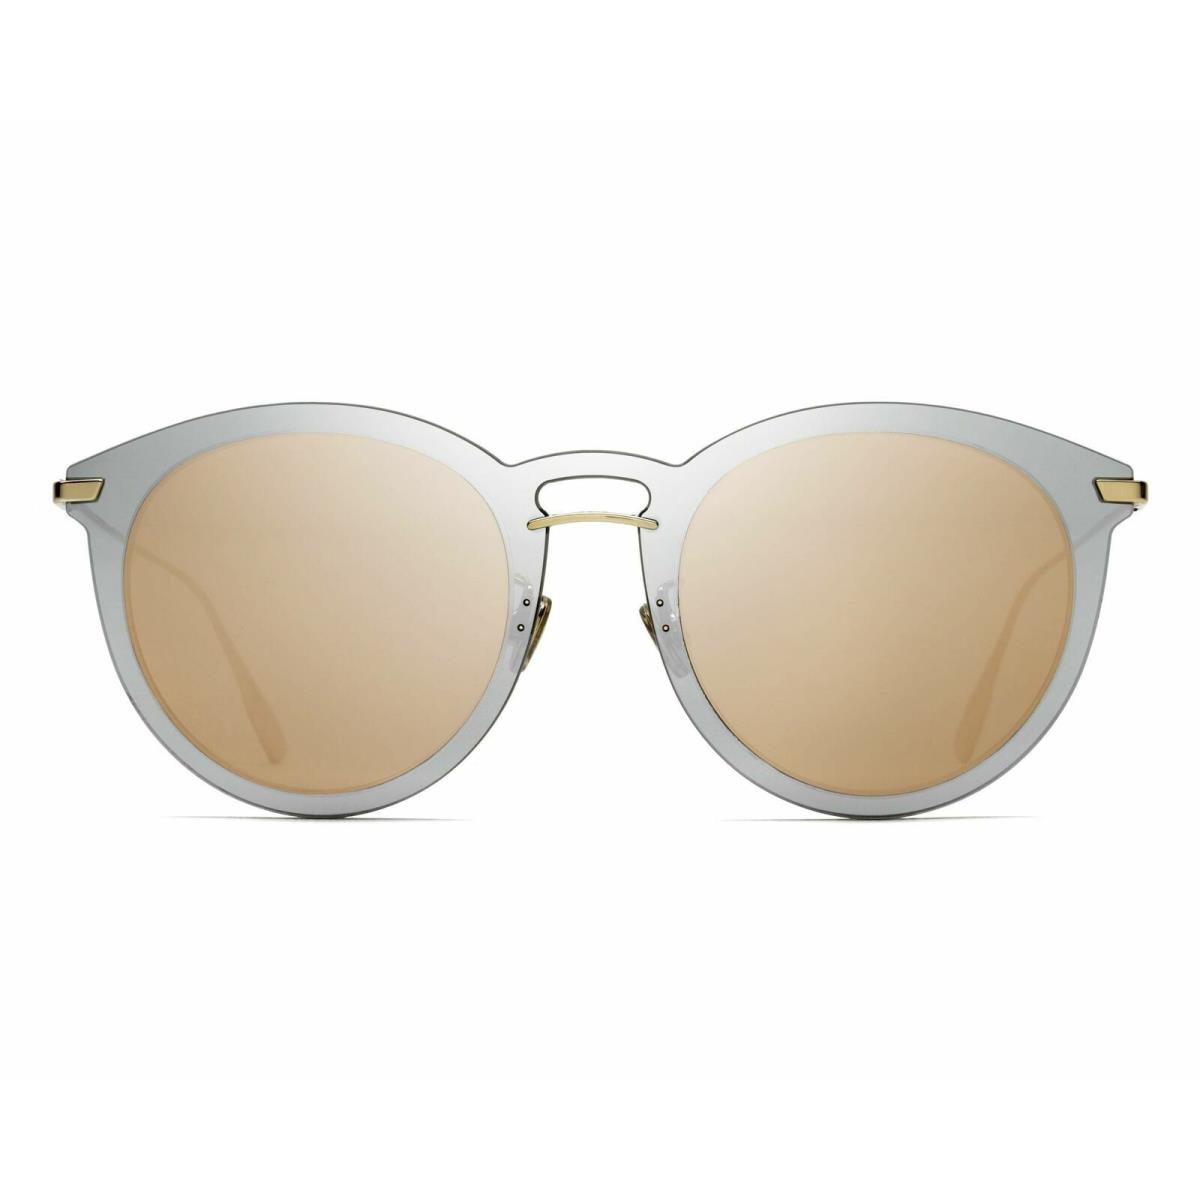 Christian Dior Diorultimef Avbsq Gold Silver / Gold Tinted Sunglasses